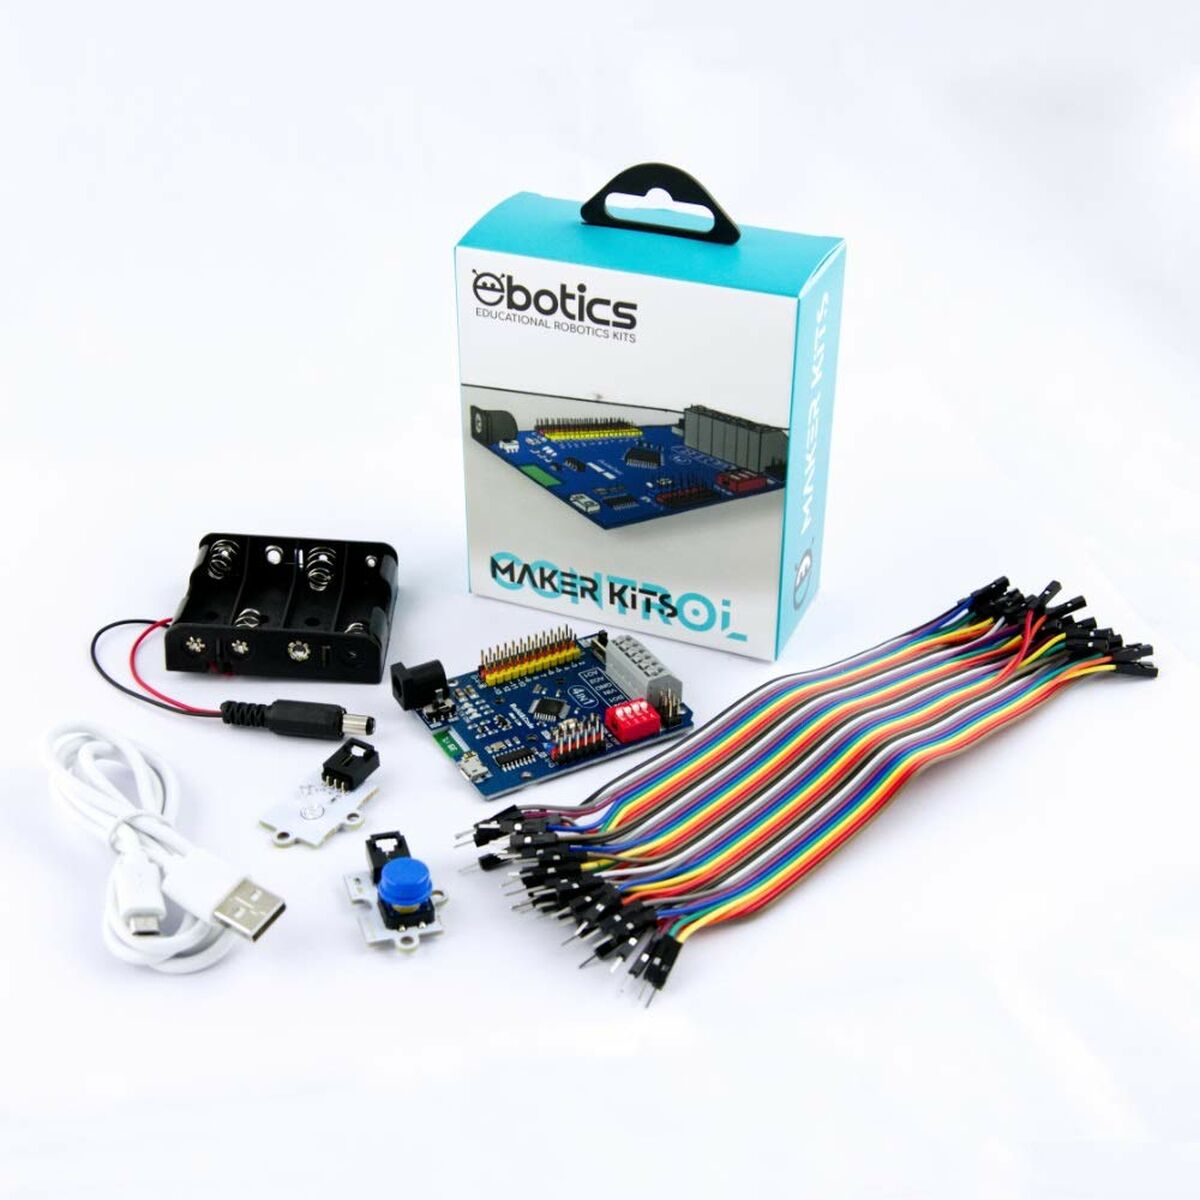 Maker Control Robotic Kit